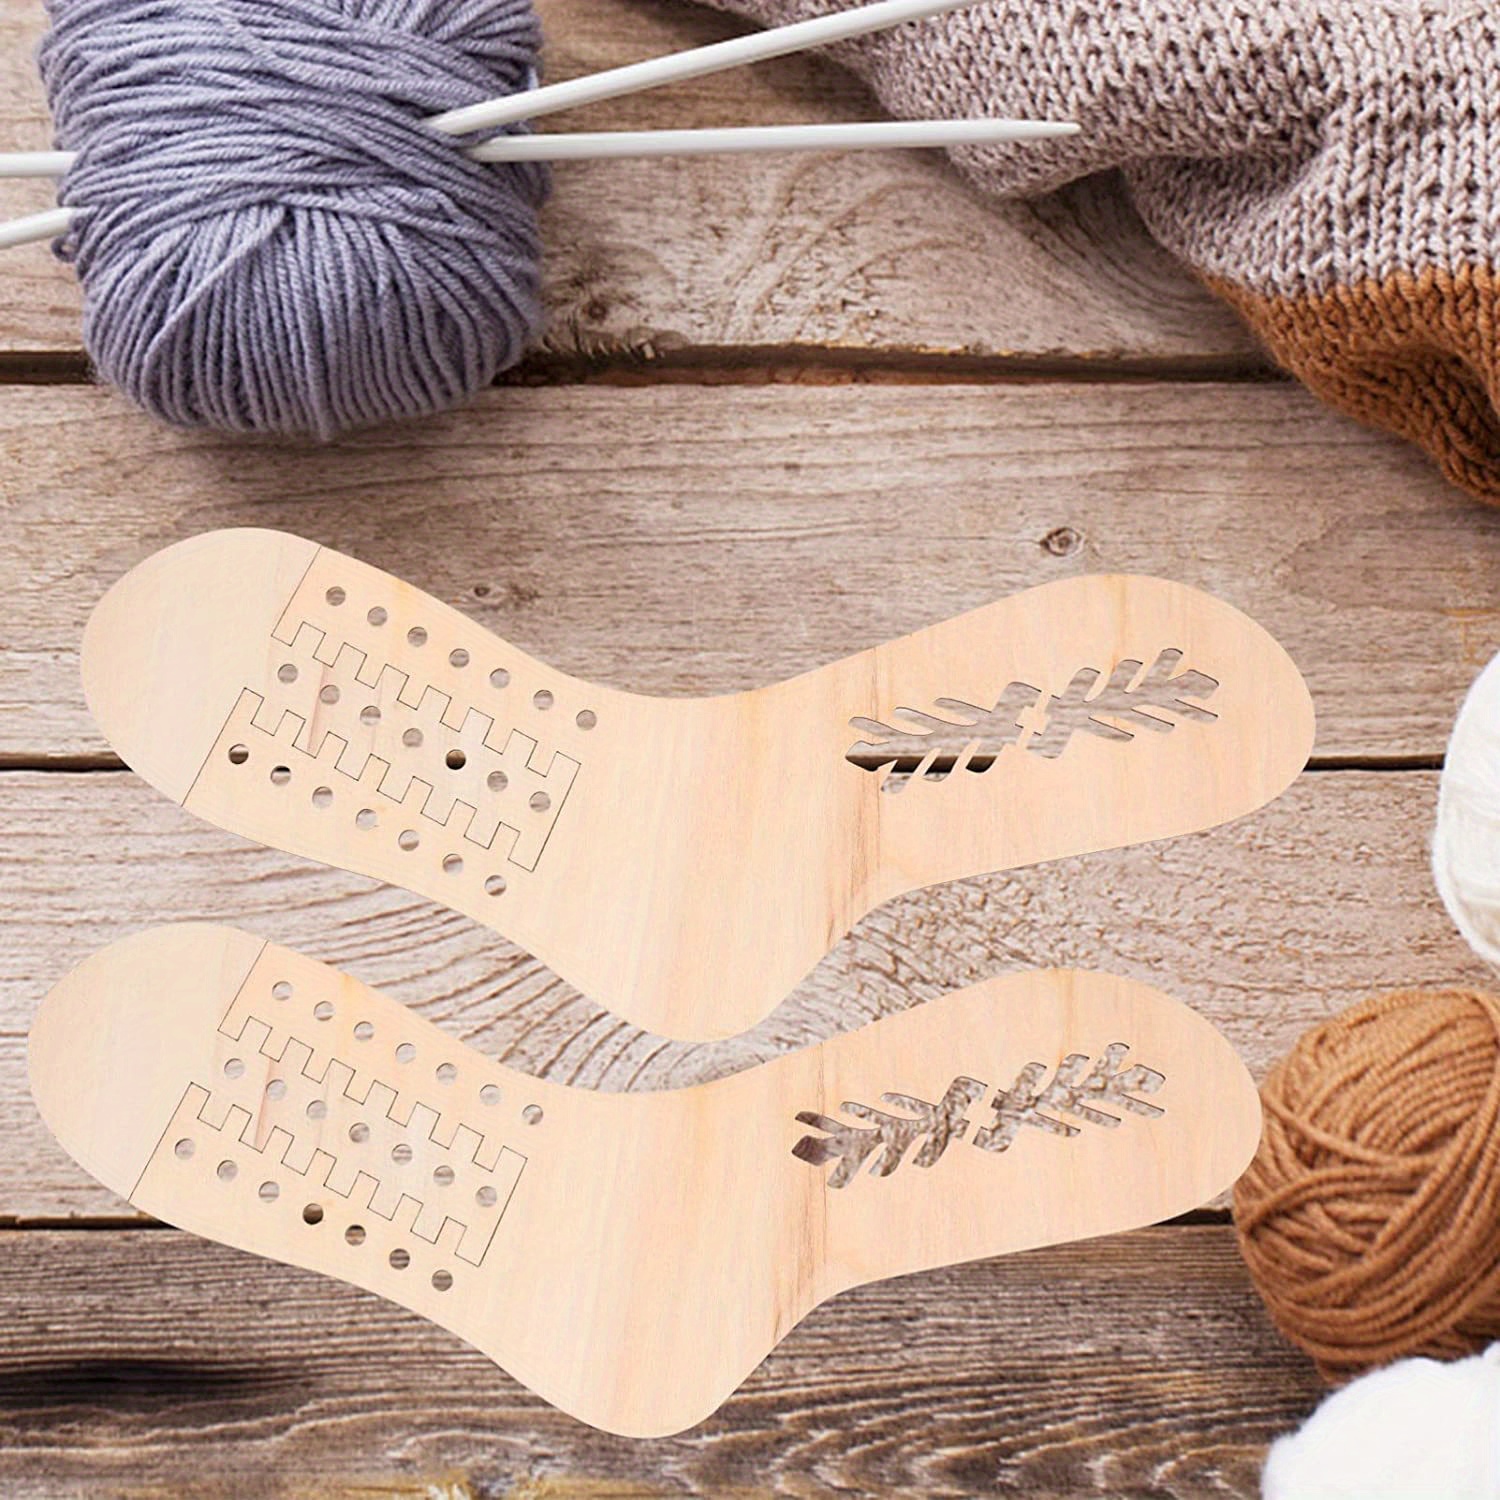 Knit Picks Sock Blocker Product Demo 